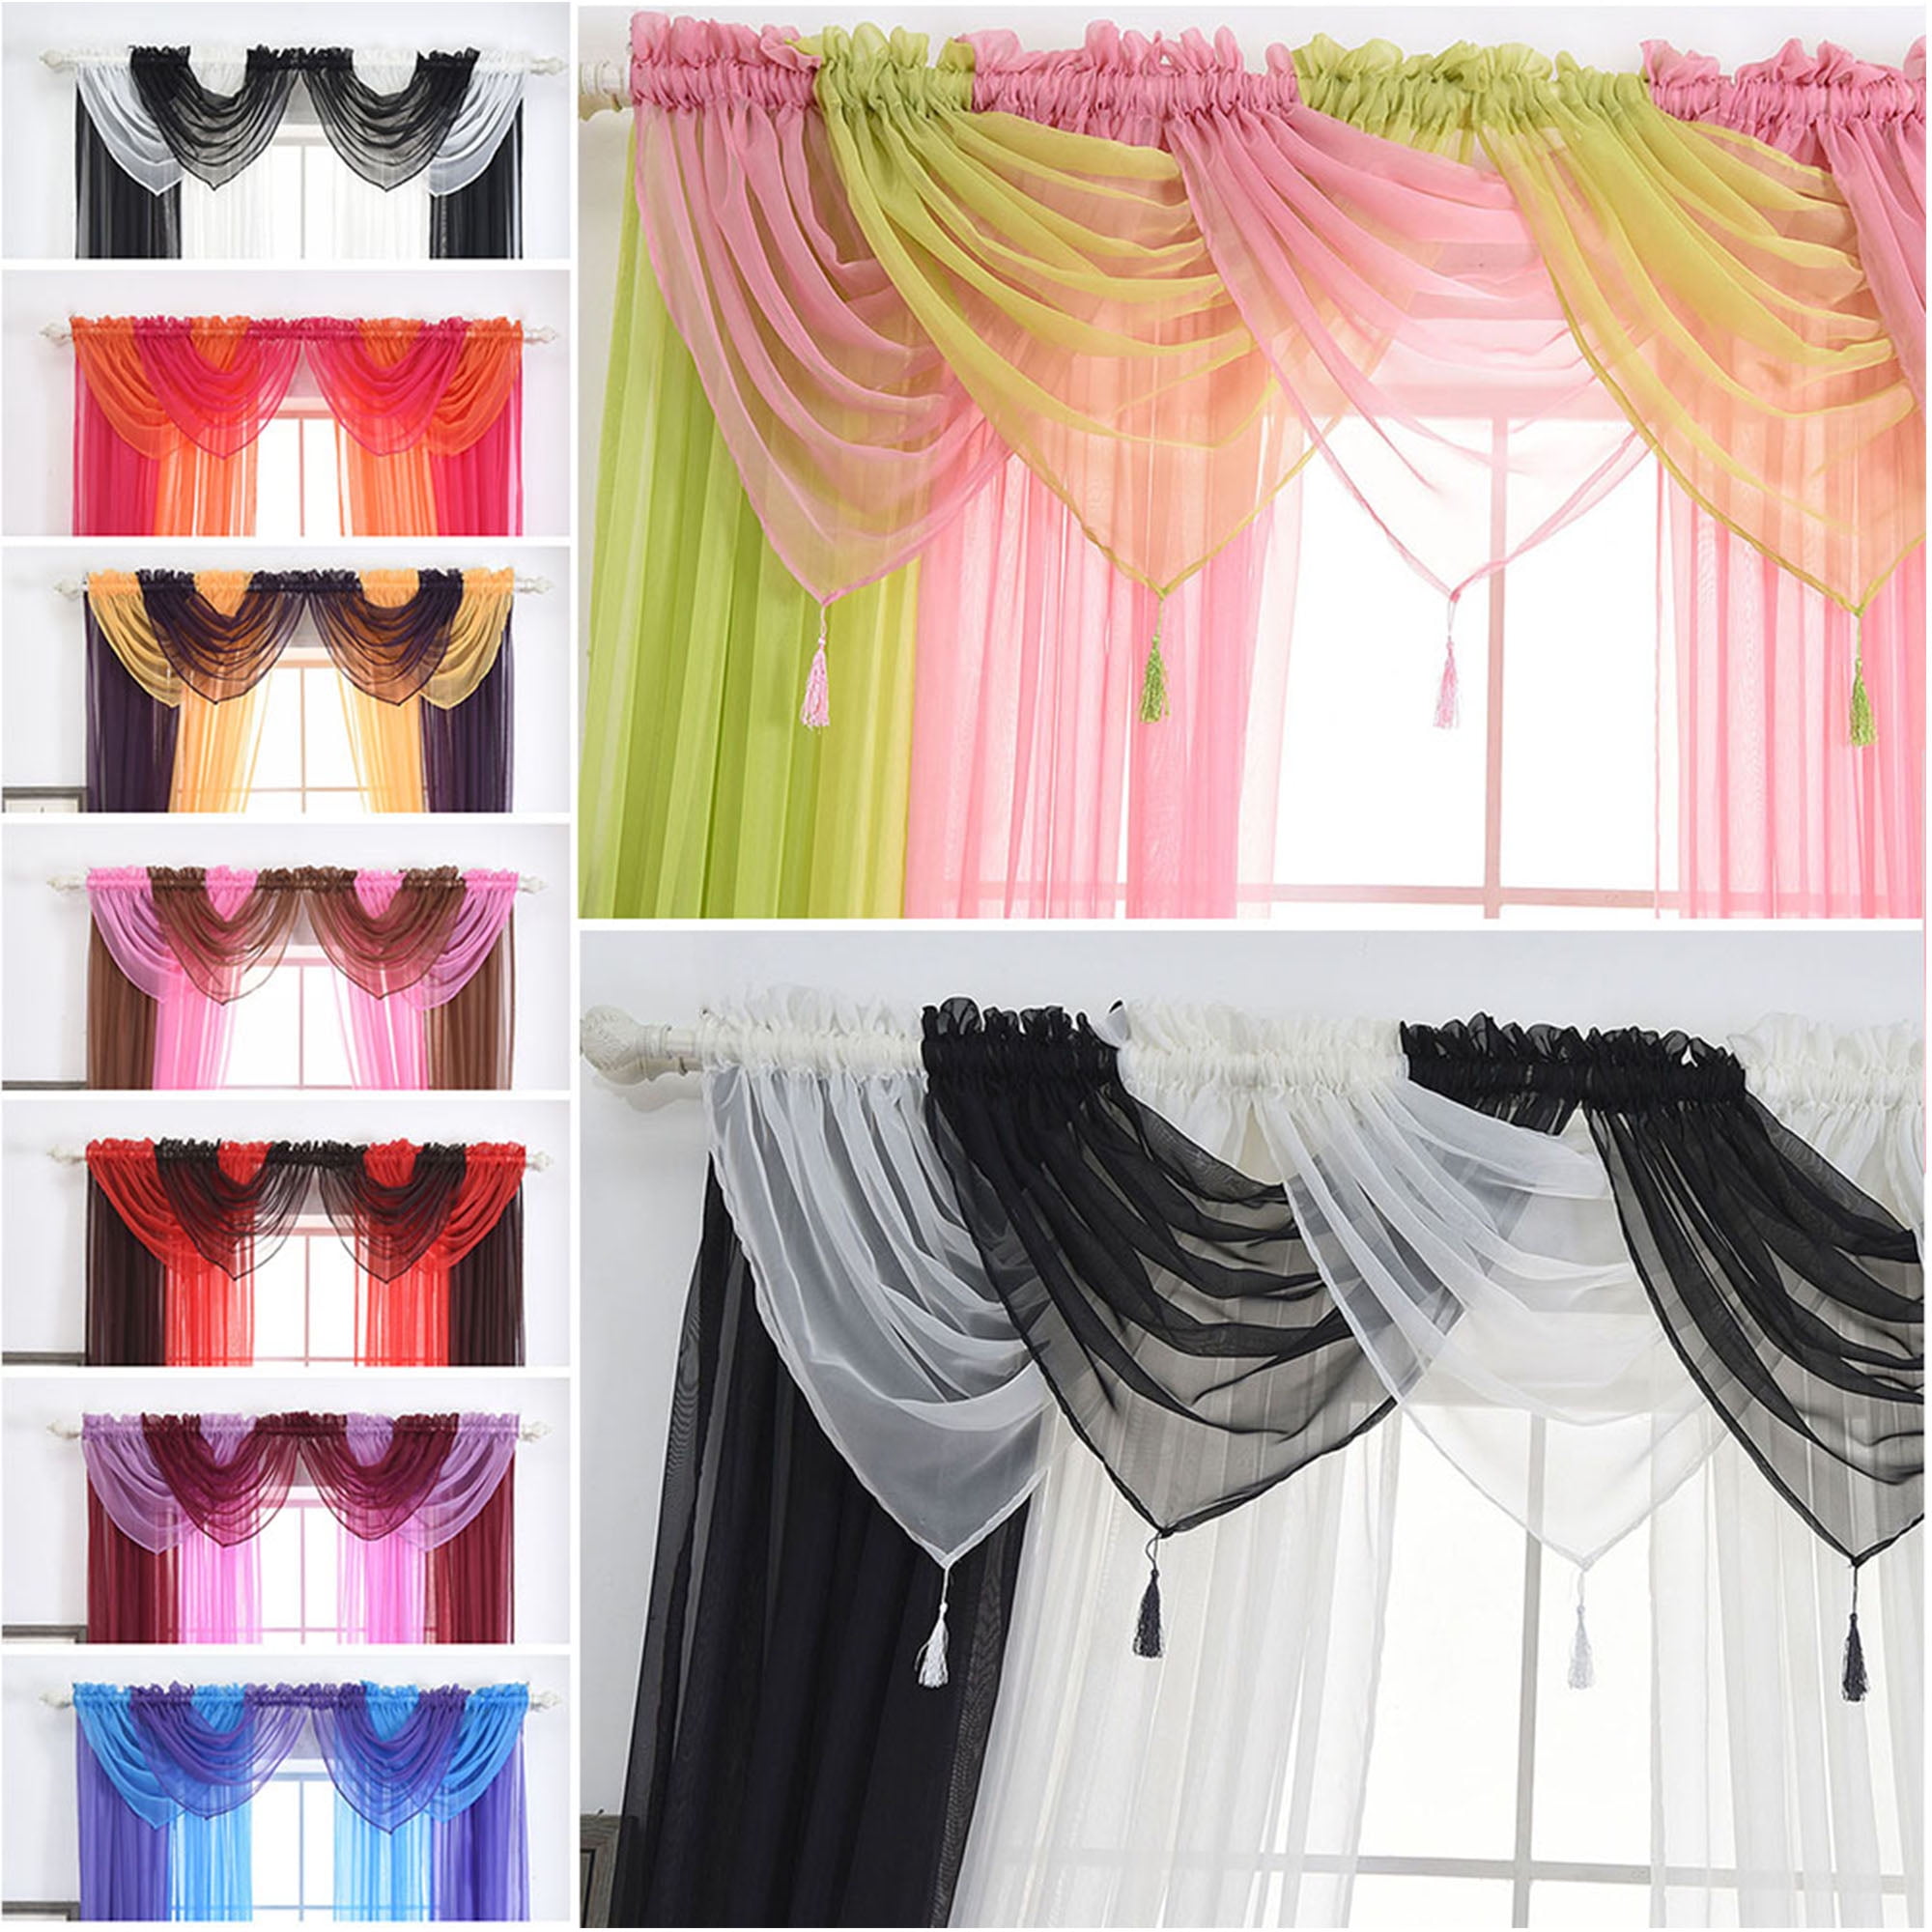 Swag Pelmet Valance Pink Bedroom Curtains Drapes Sheer Fabric Eyelets Rod Pocket 